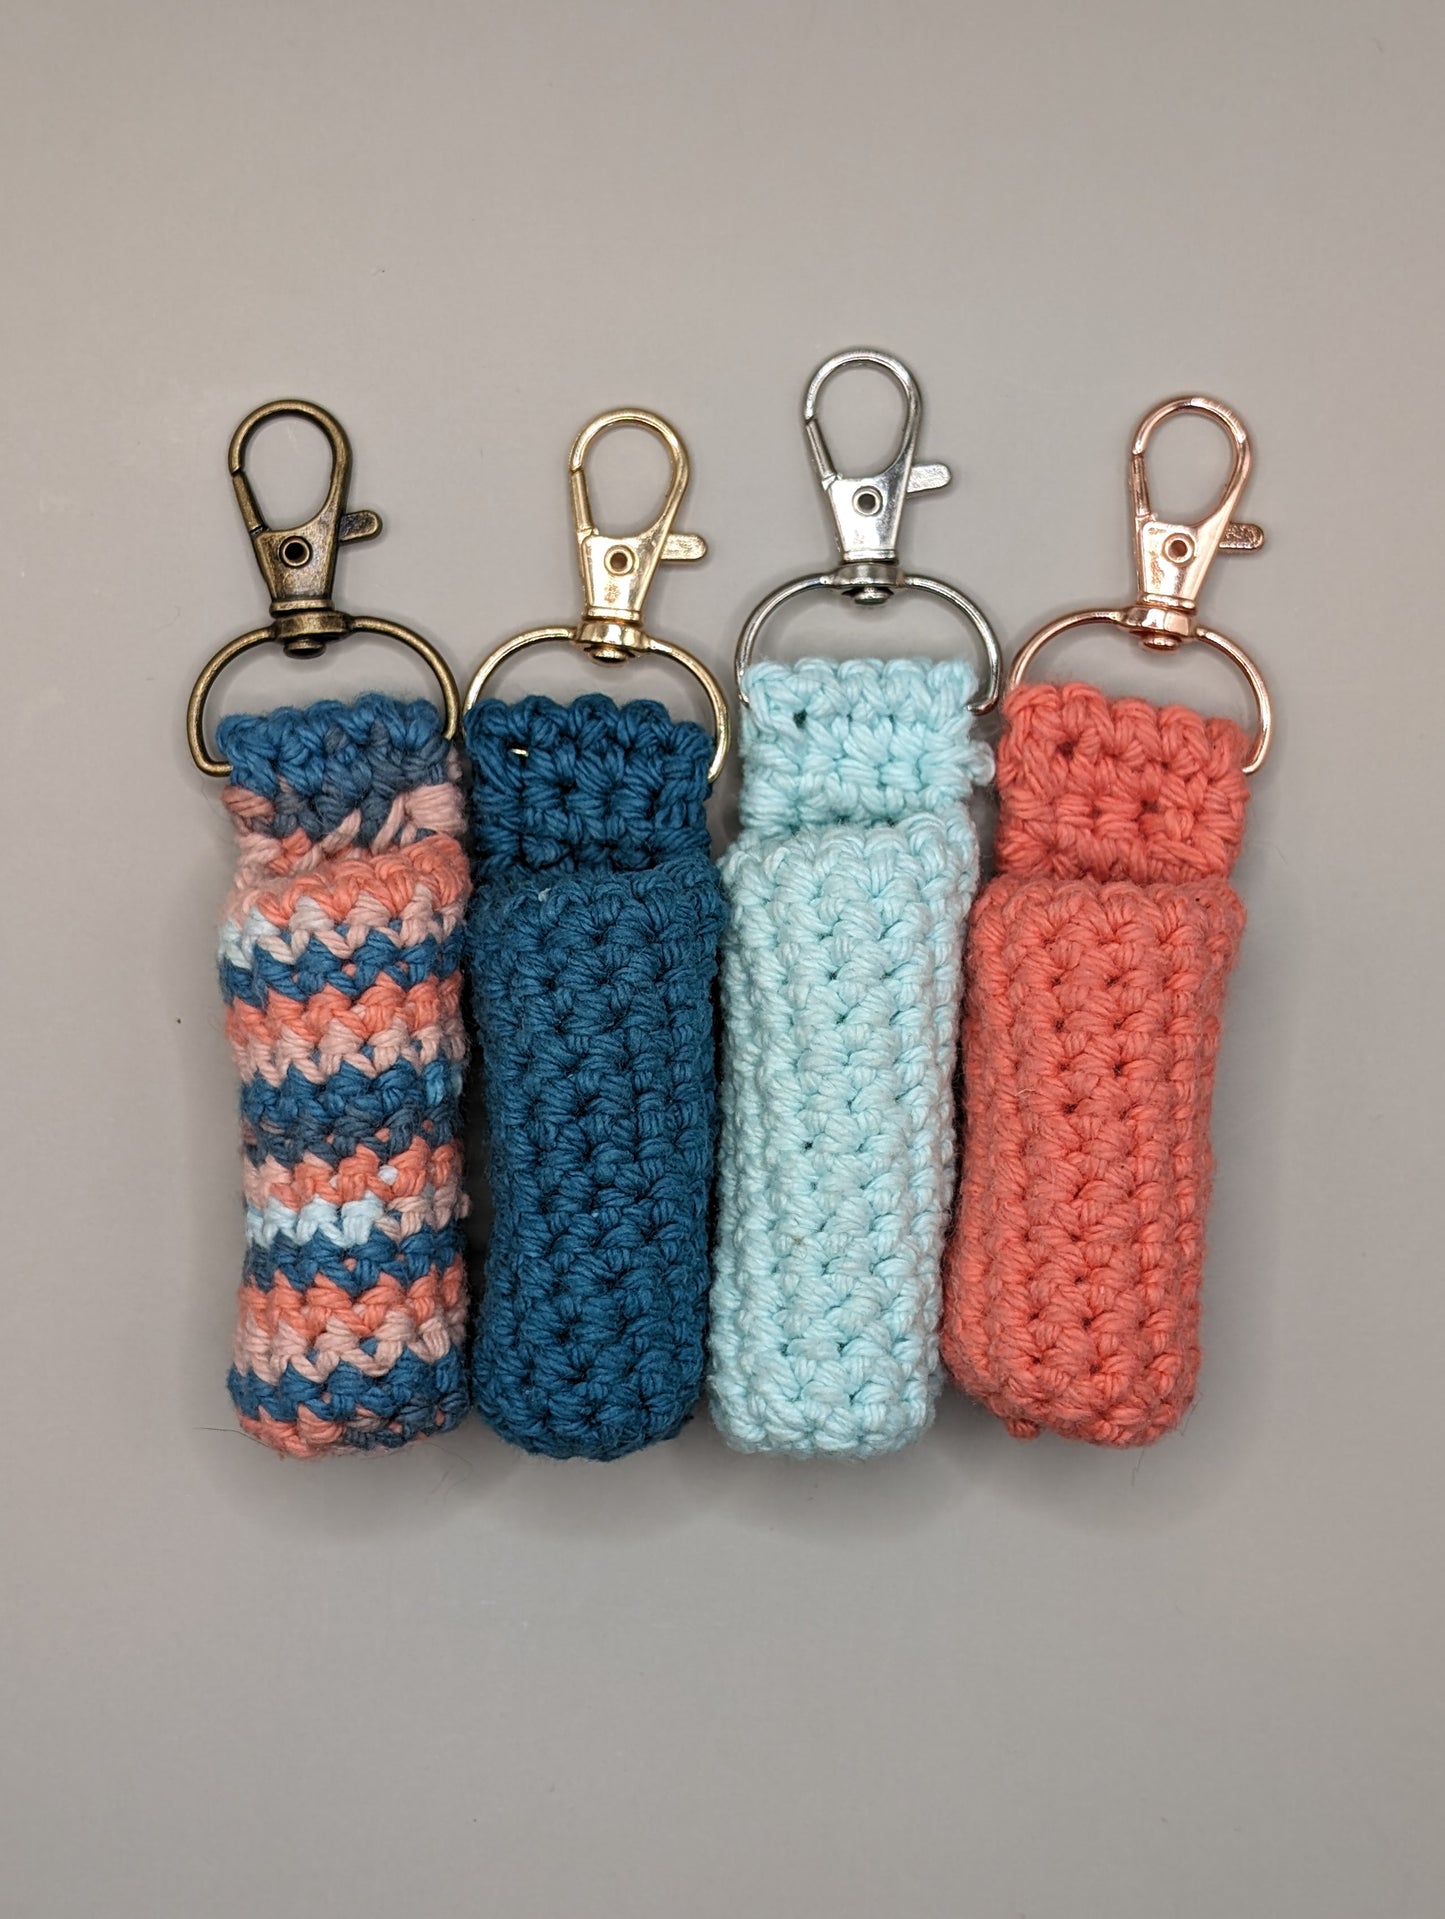 Hand-Crocheted Caddy for Lip Balm, Lip Oil, Inhalers, etc